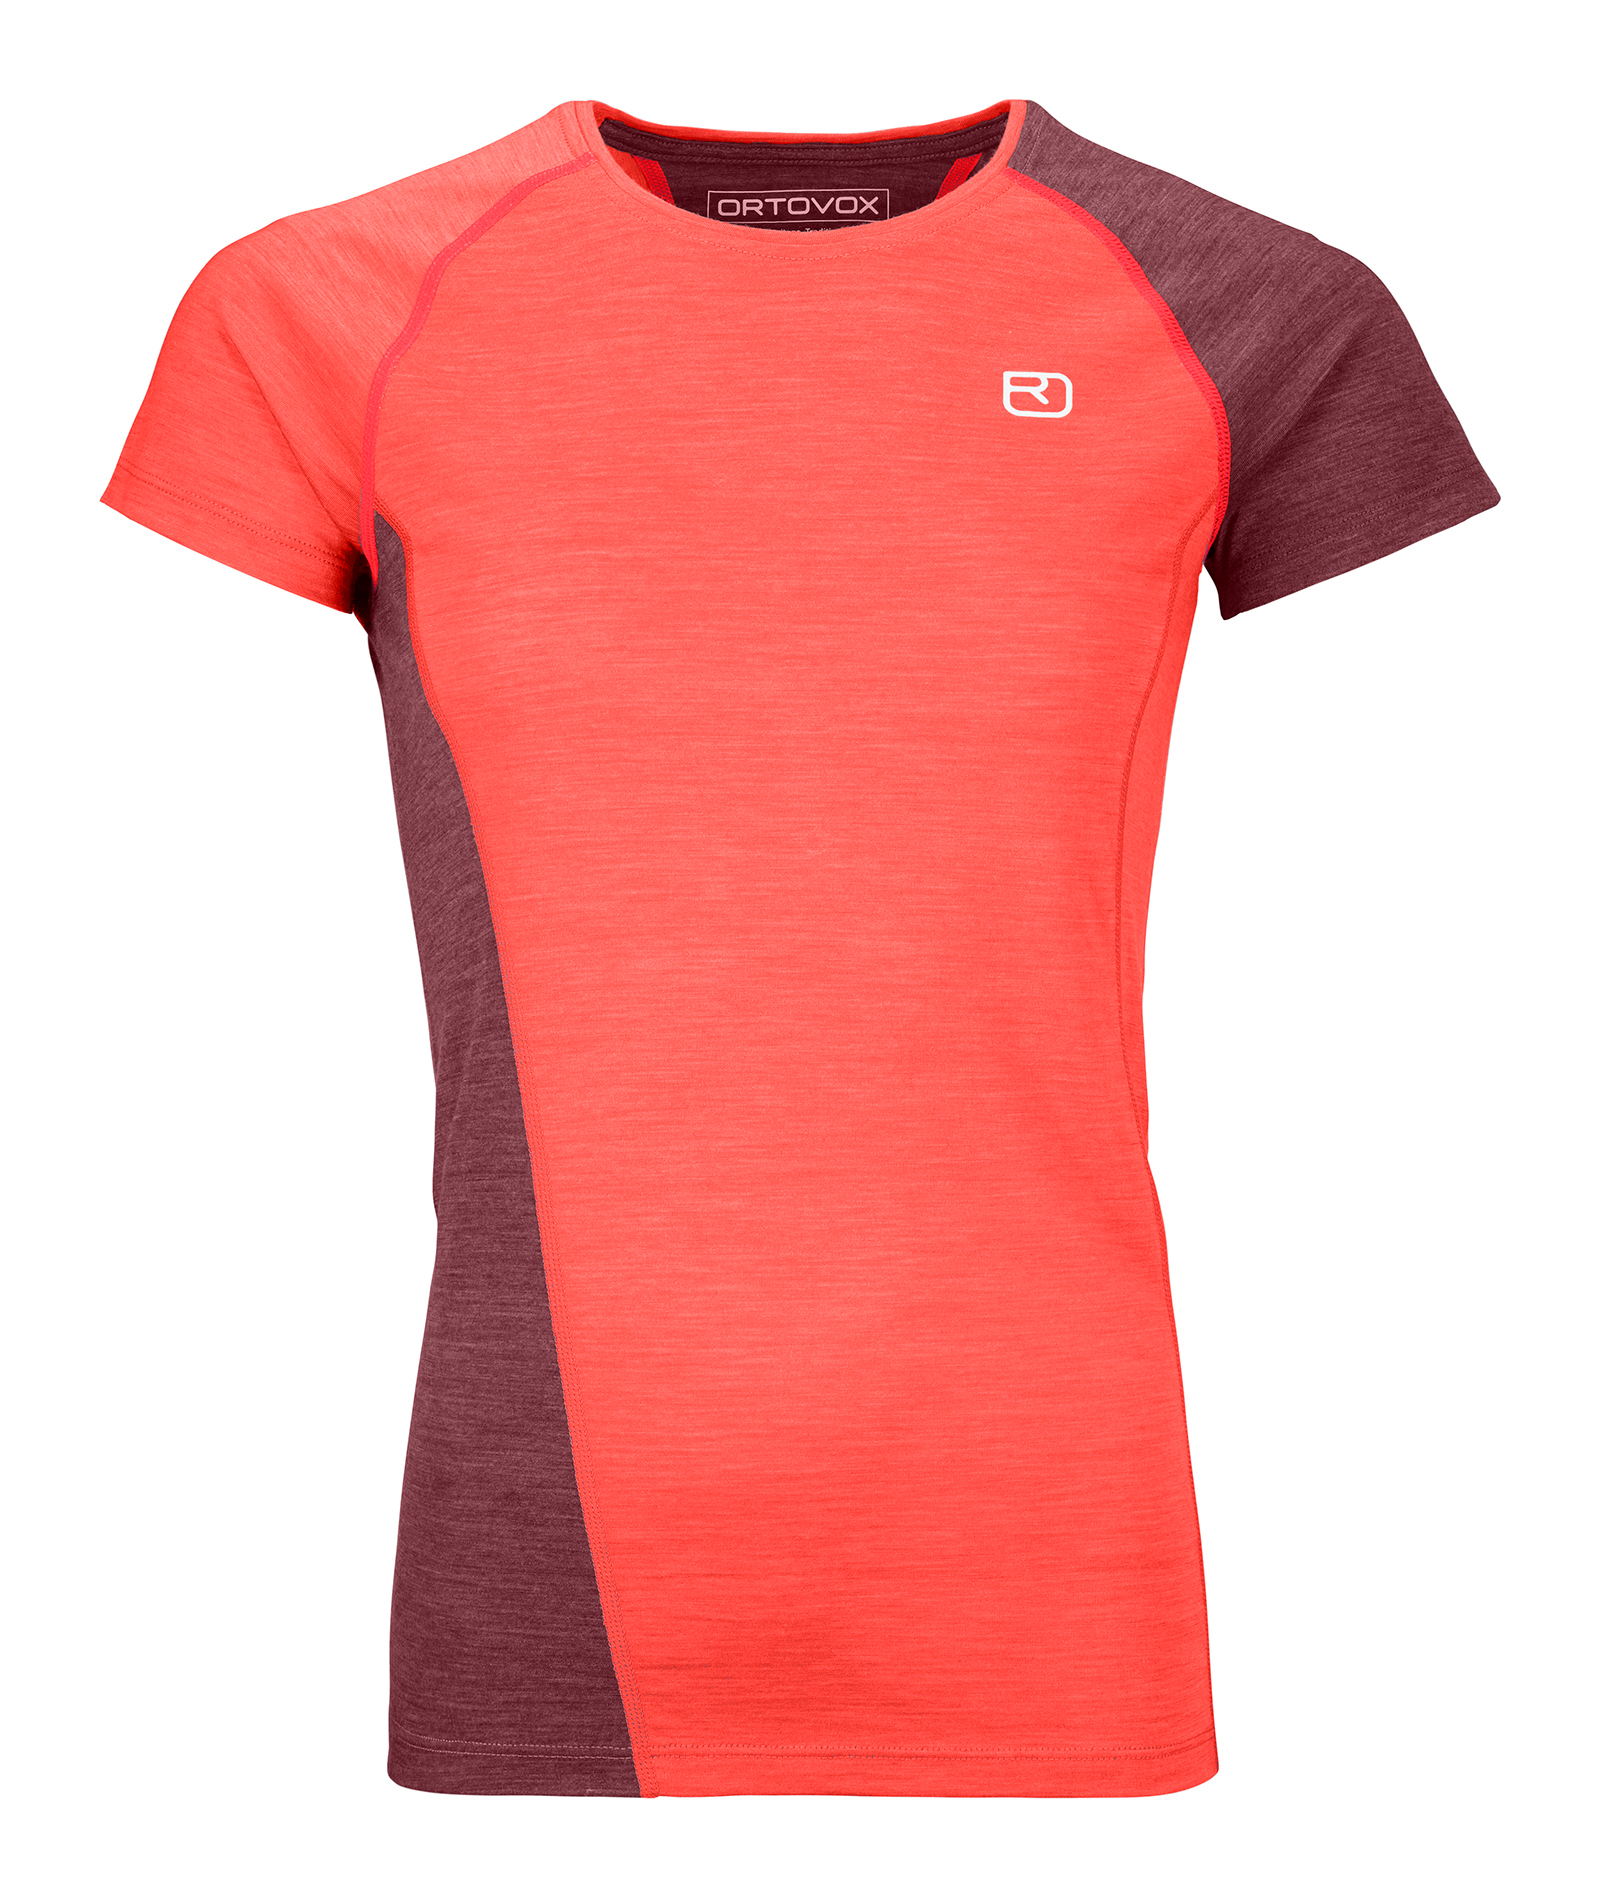 Ortovox 120 Cool Tec Fast Upward - T-shirt en laine mérinos femme